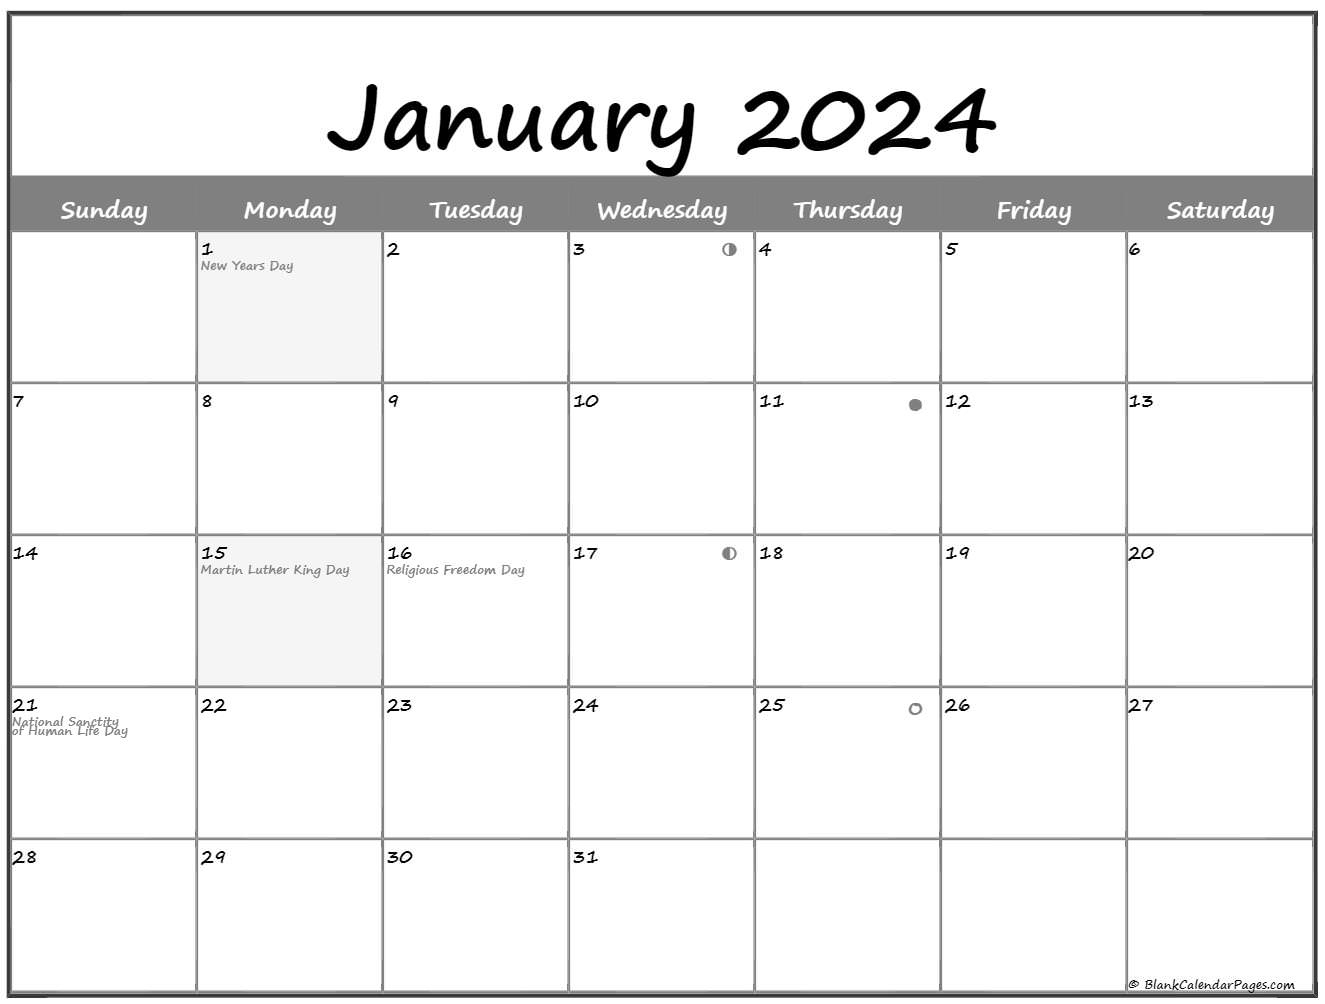 January 2024 Lunar Calendar Moon Phase Calendar - Free Printable 2024 Monthly Calendar With Holidays Moon Phases